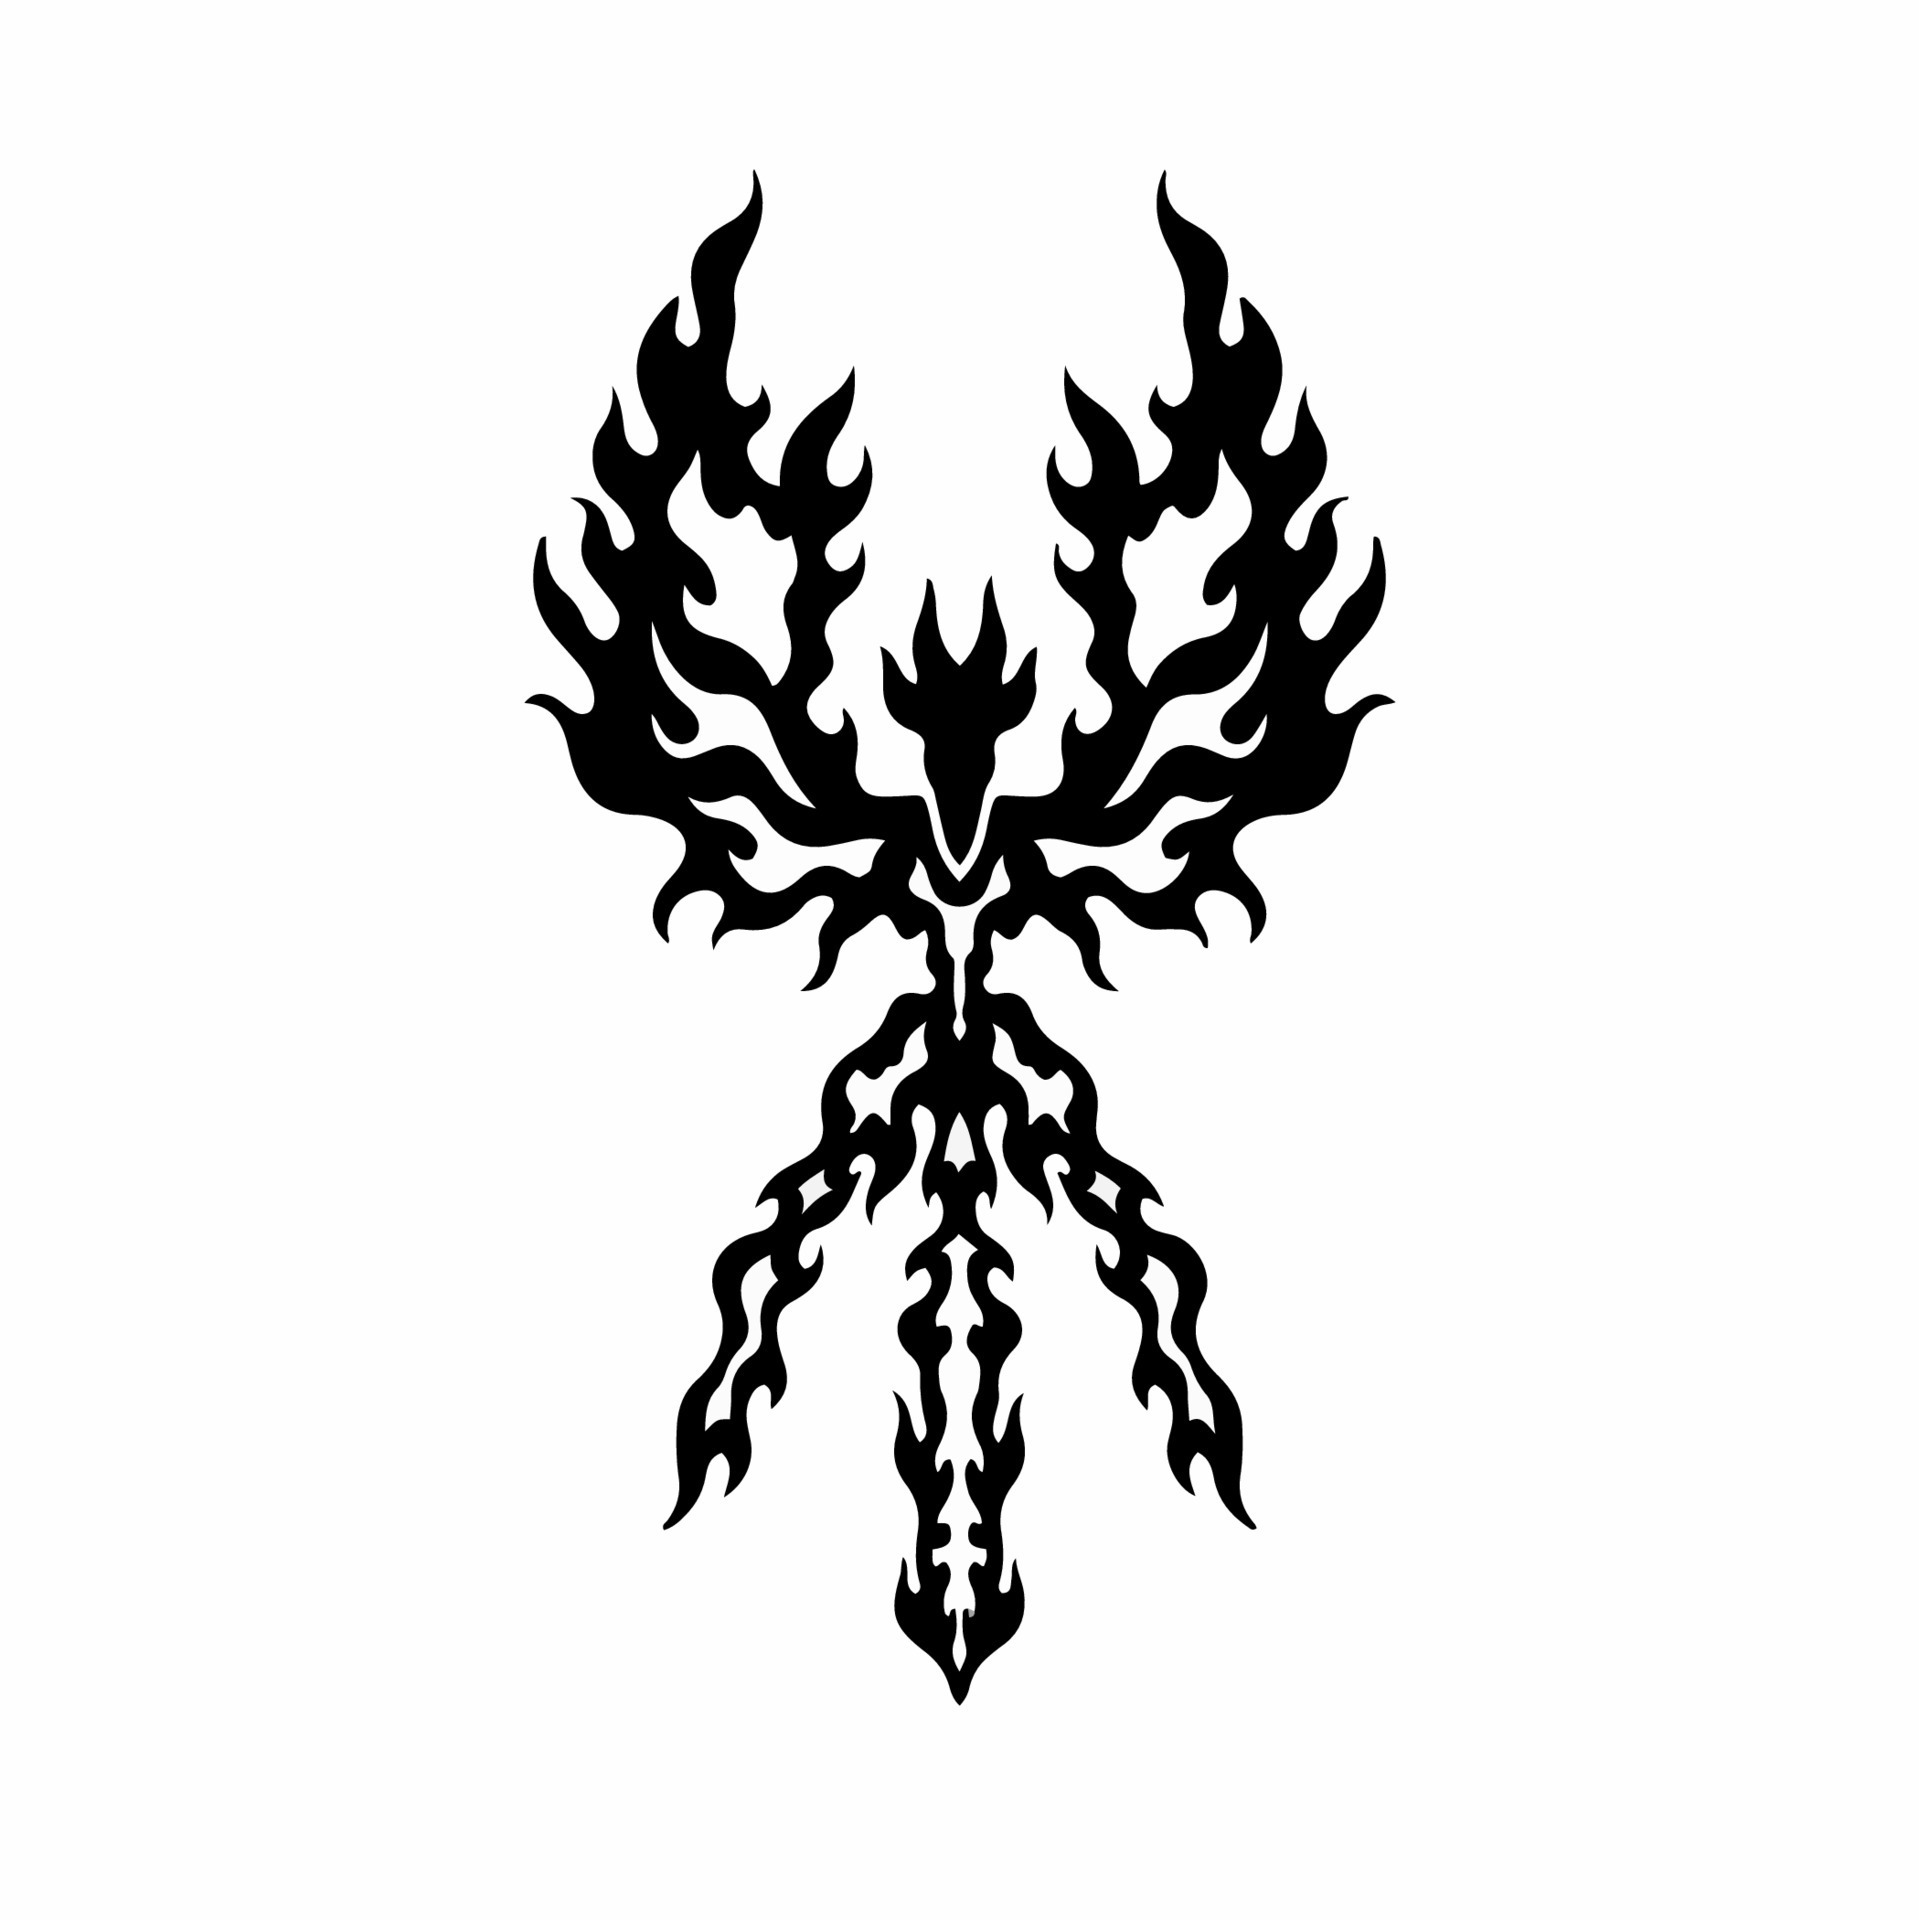 170 Silhouette Of The Tribal Phoenix Tattoo Designs Illustrations  RoyaltyFree Vector Graphics  Clip Art  iStock